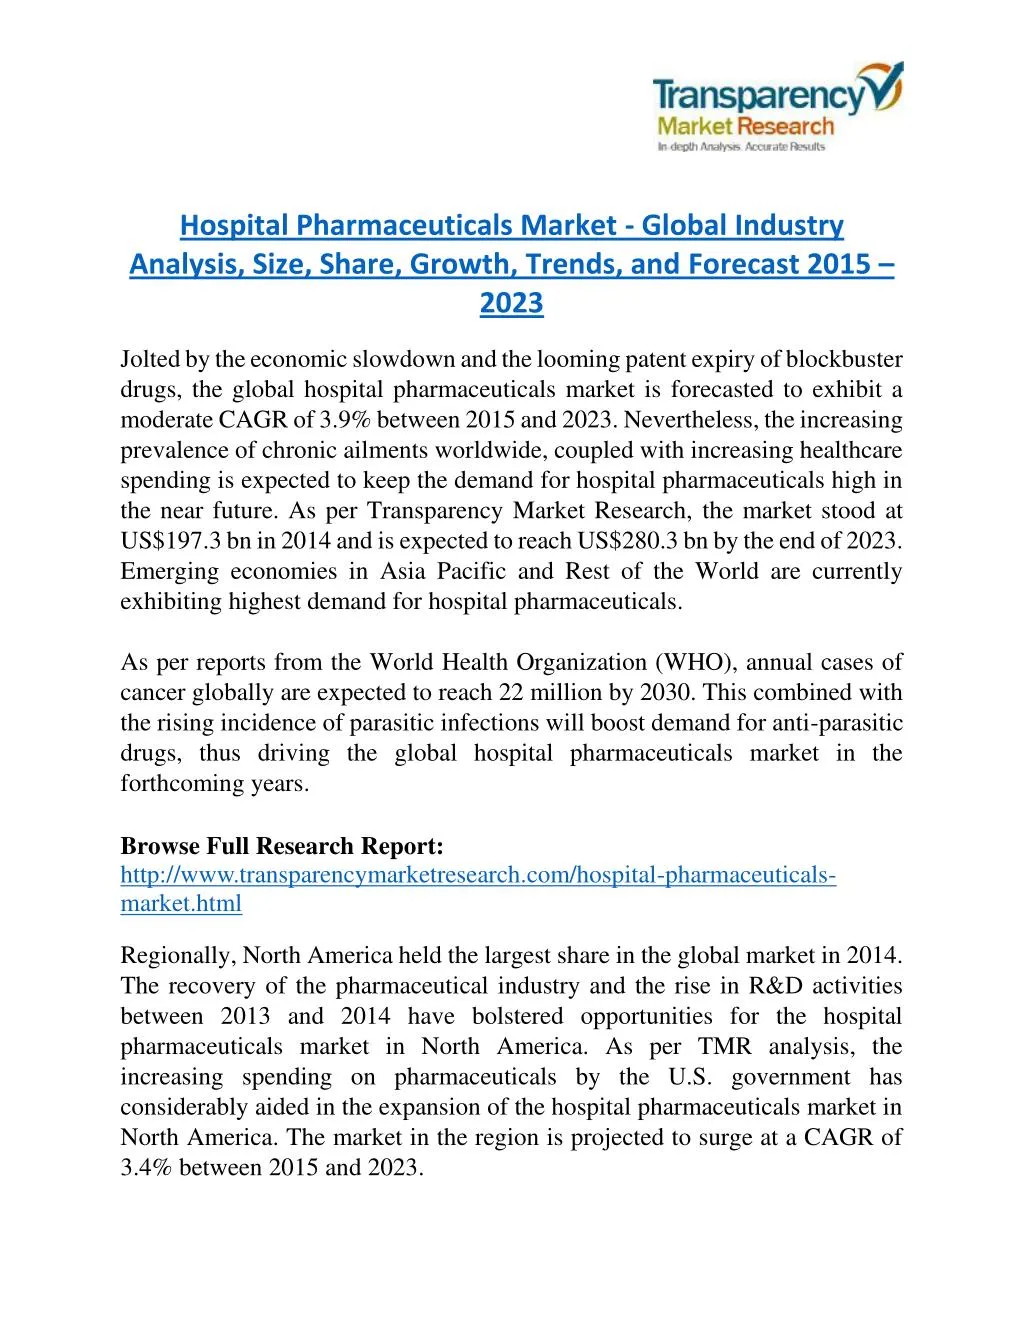 hospital pharmaceuticals market global industry